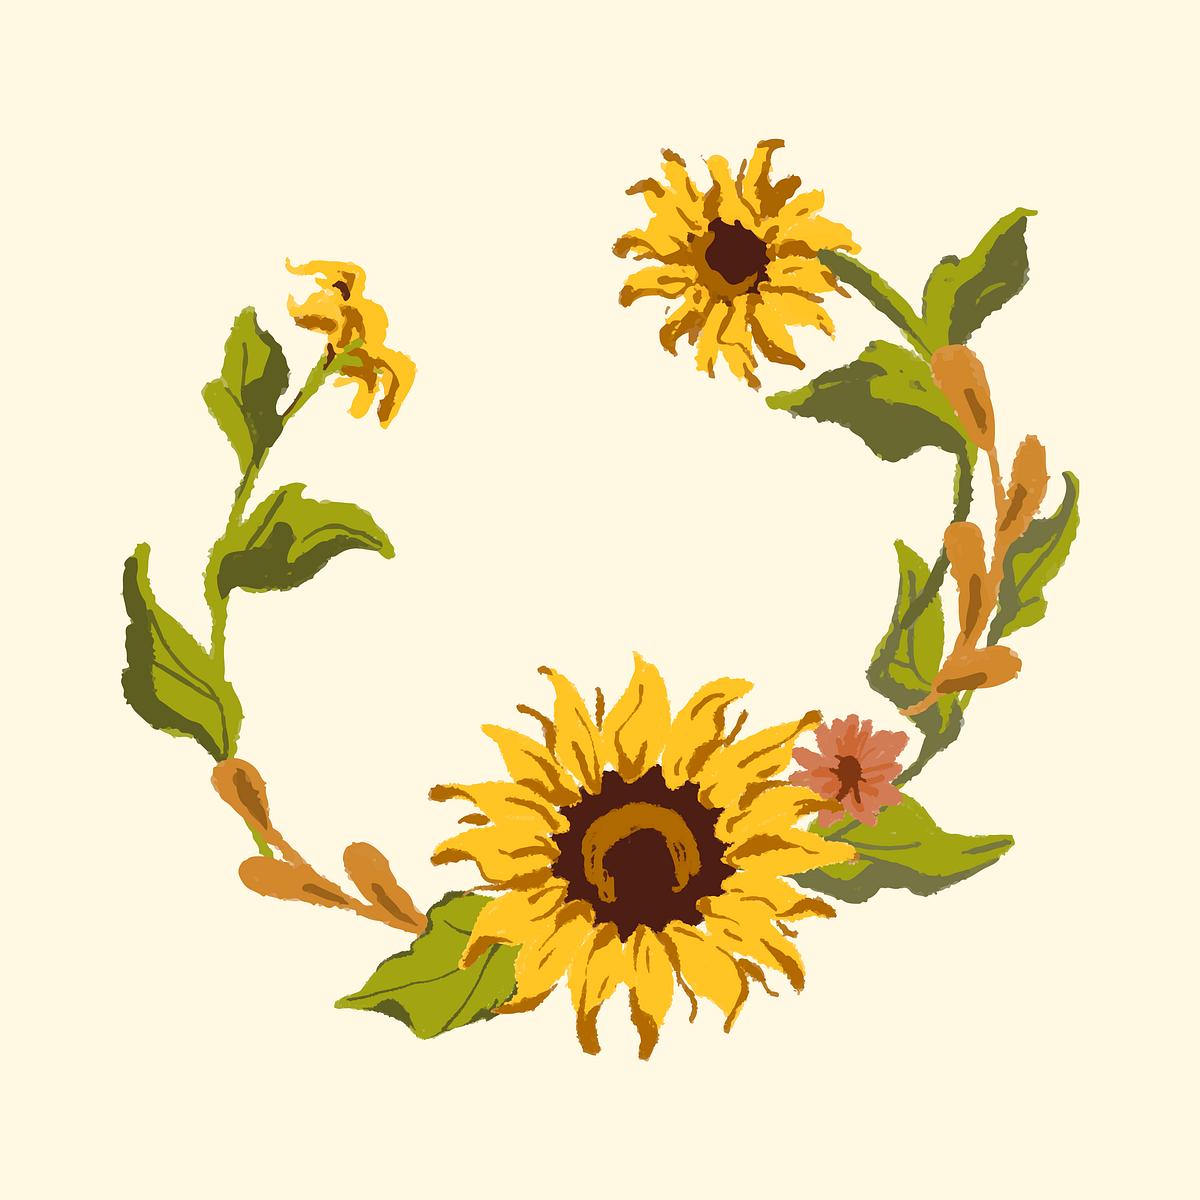 Sunflower wreath | Free stock illustration - 558710